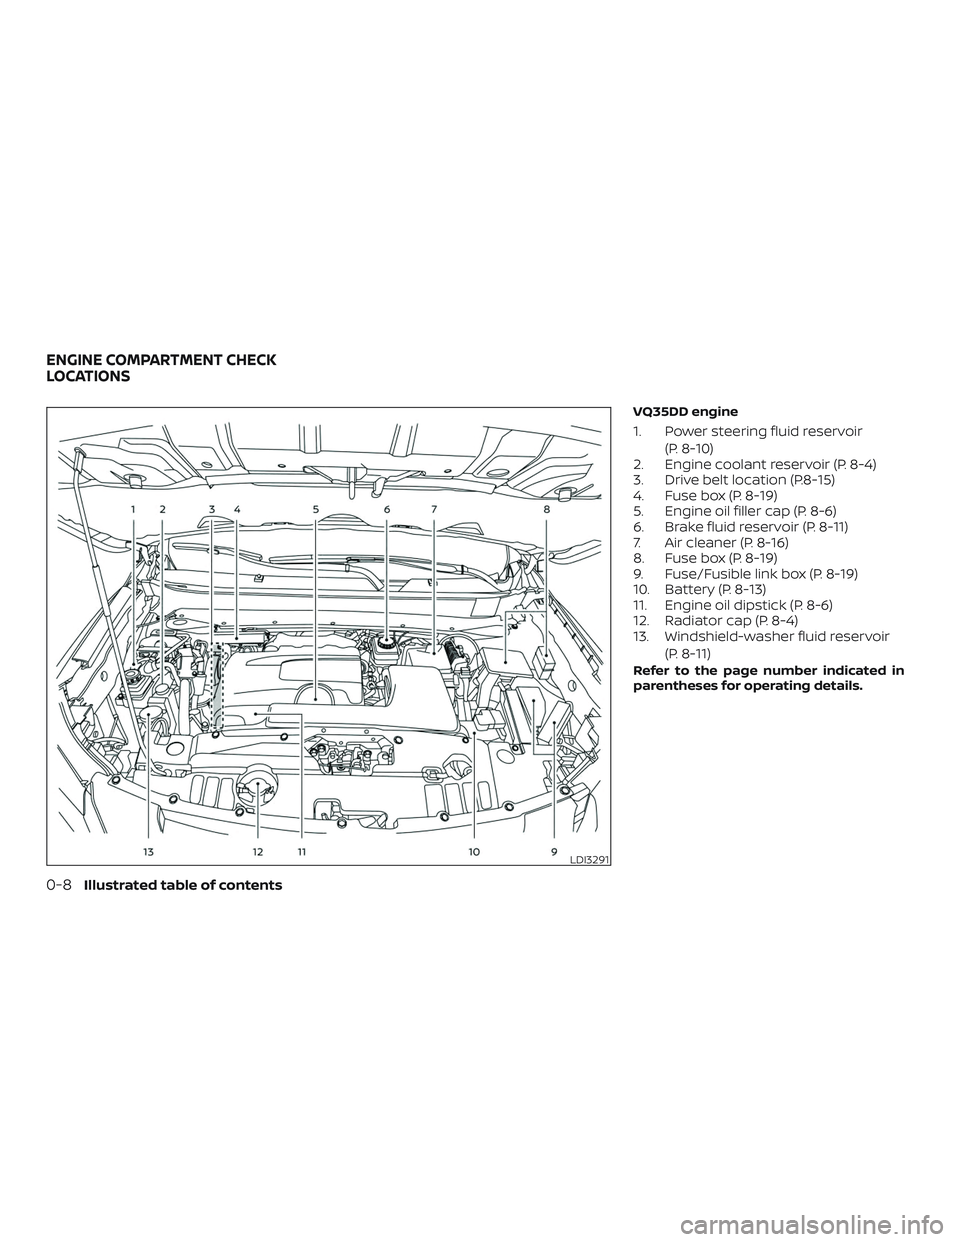 NISSAN PATHFINDER 2019  Owner´s Manual VQ35DD engine
1. Power steering fluid reservoir(P. 8-10)
2. Engine coolant reservoir (P. 8-4)
3. Drive belt location (P.8-15)
4. Fuse box (P. 8-19)
5. Engine oil filler cap (P. 8-6)
6. Brake fluid res